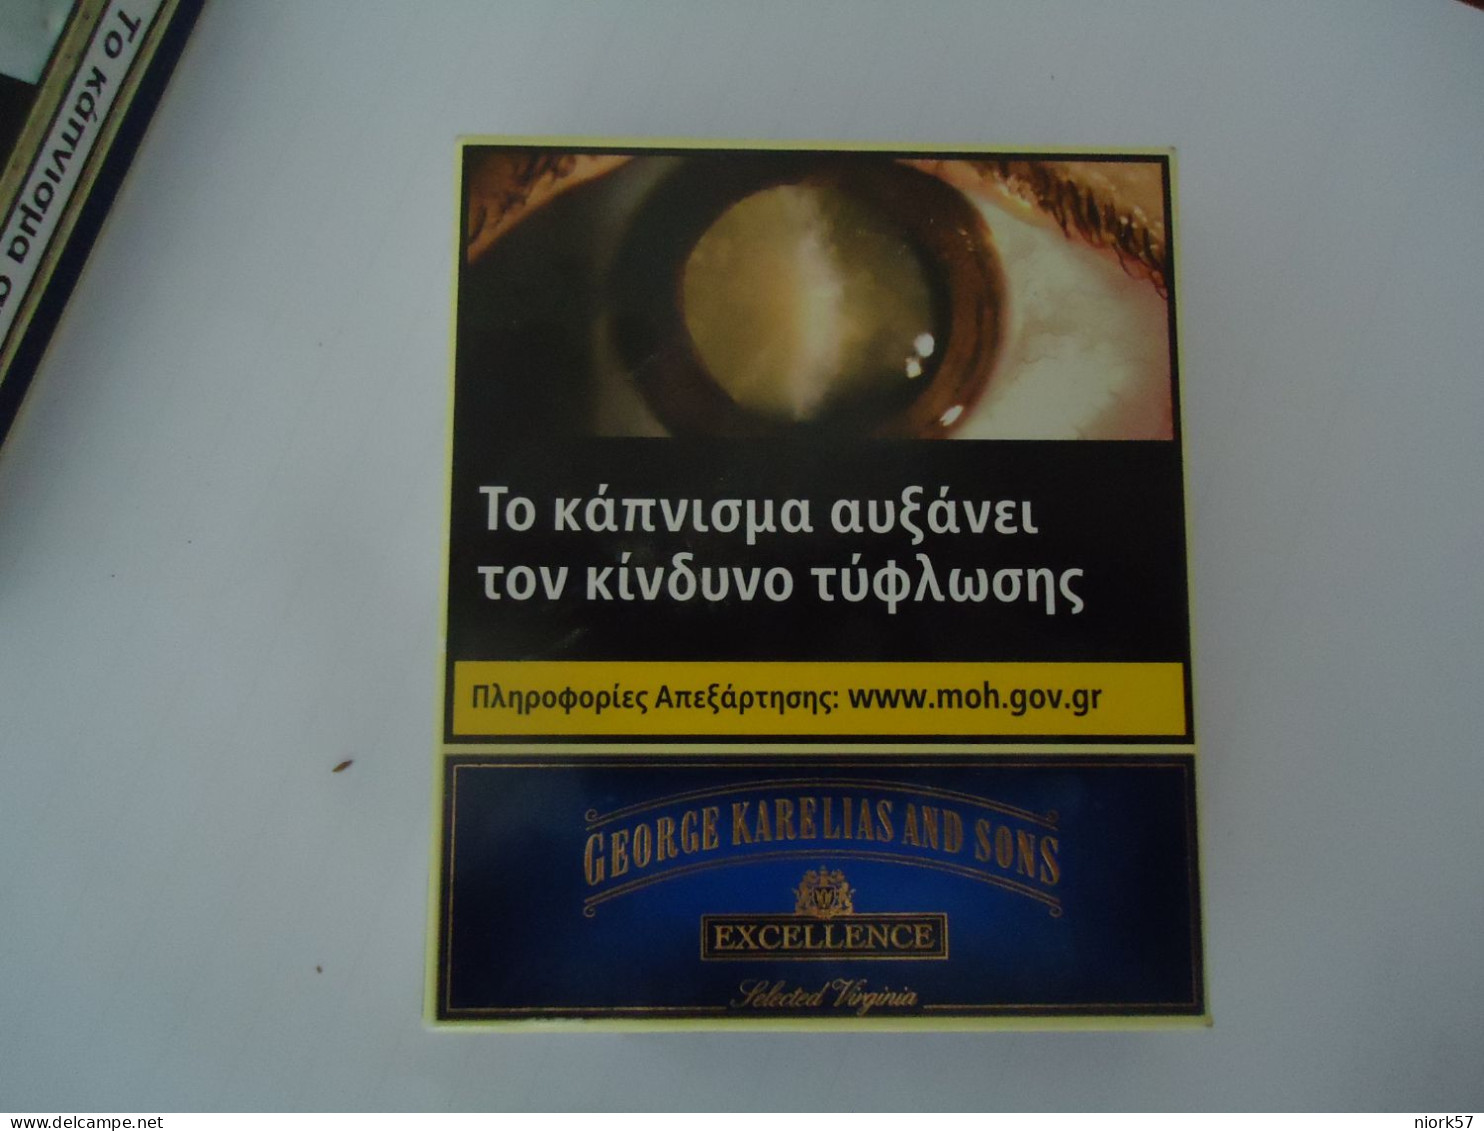 GREECE USED EMPTY CIGARETTES BOXES KARELIA   KARELIAS - Schnupftabakdosen (leer)